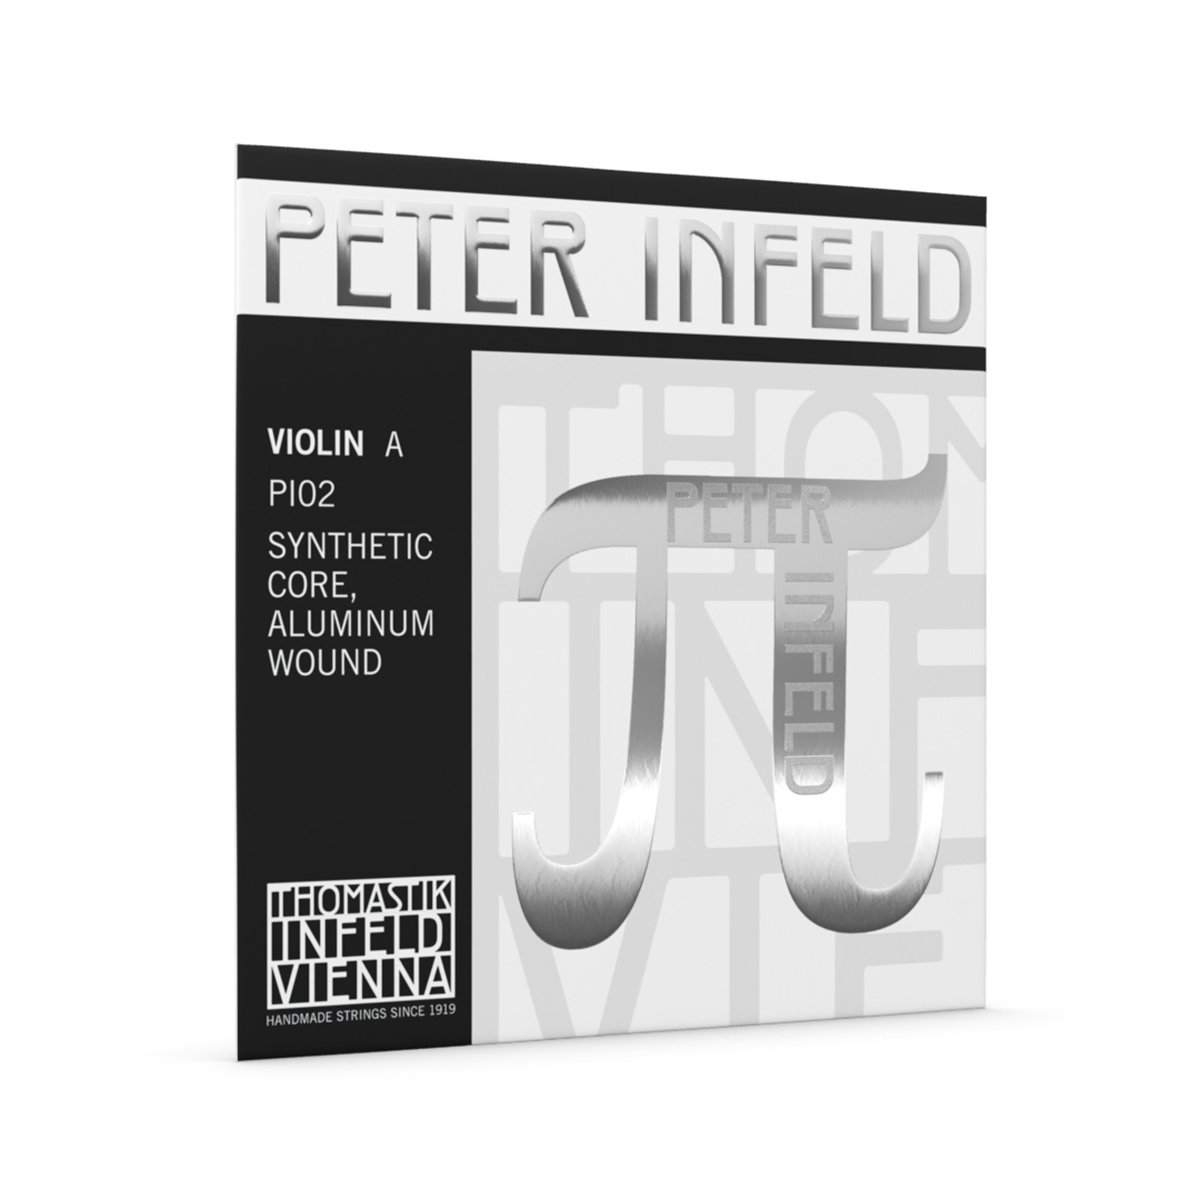 Violin String A Peter Infeld